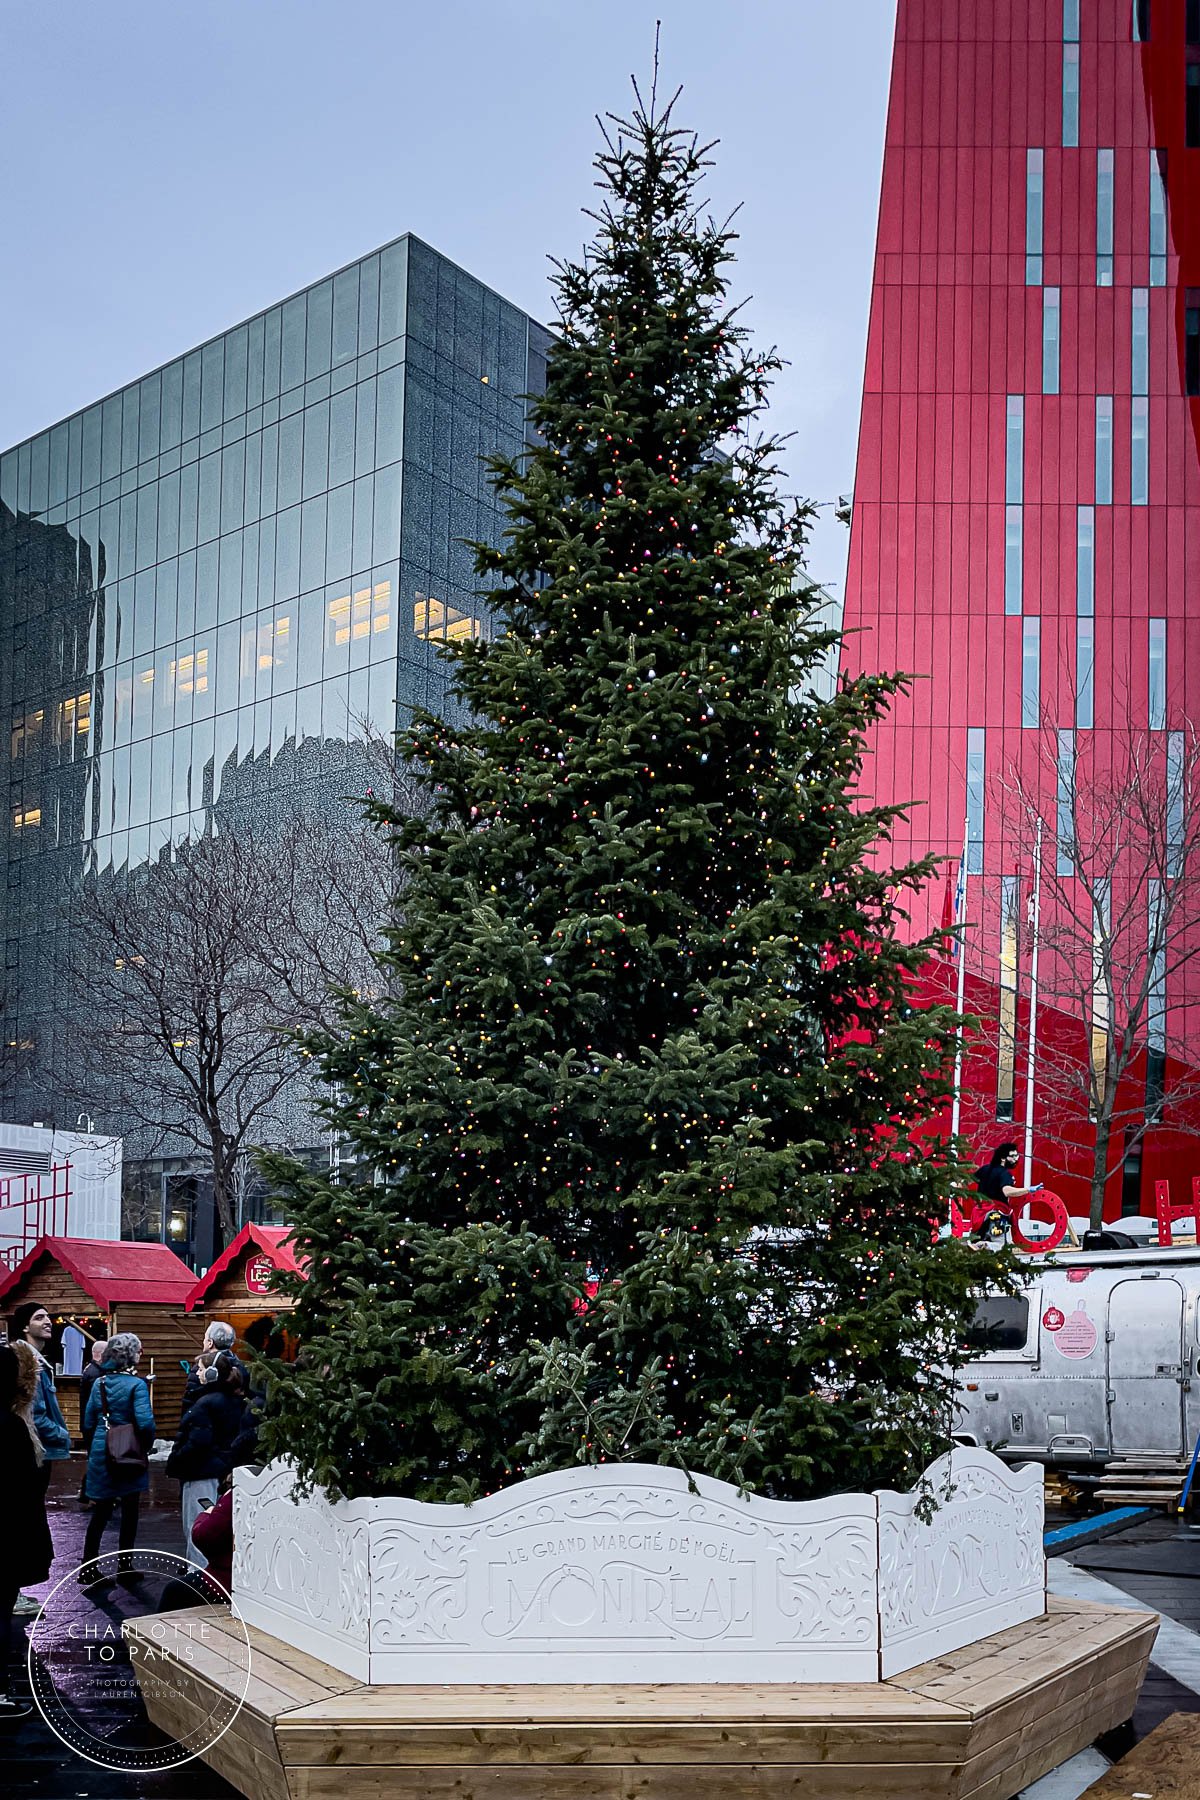 The Christmas Tree at the Montreal Christmas Market